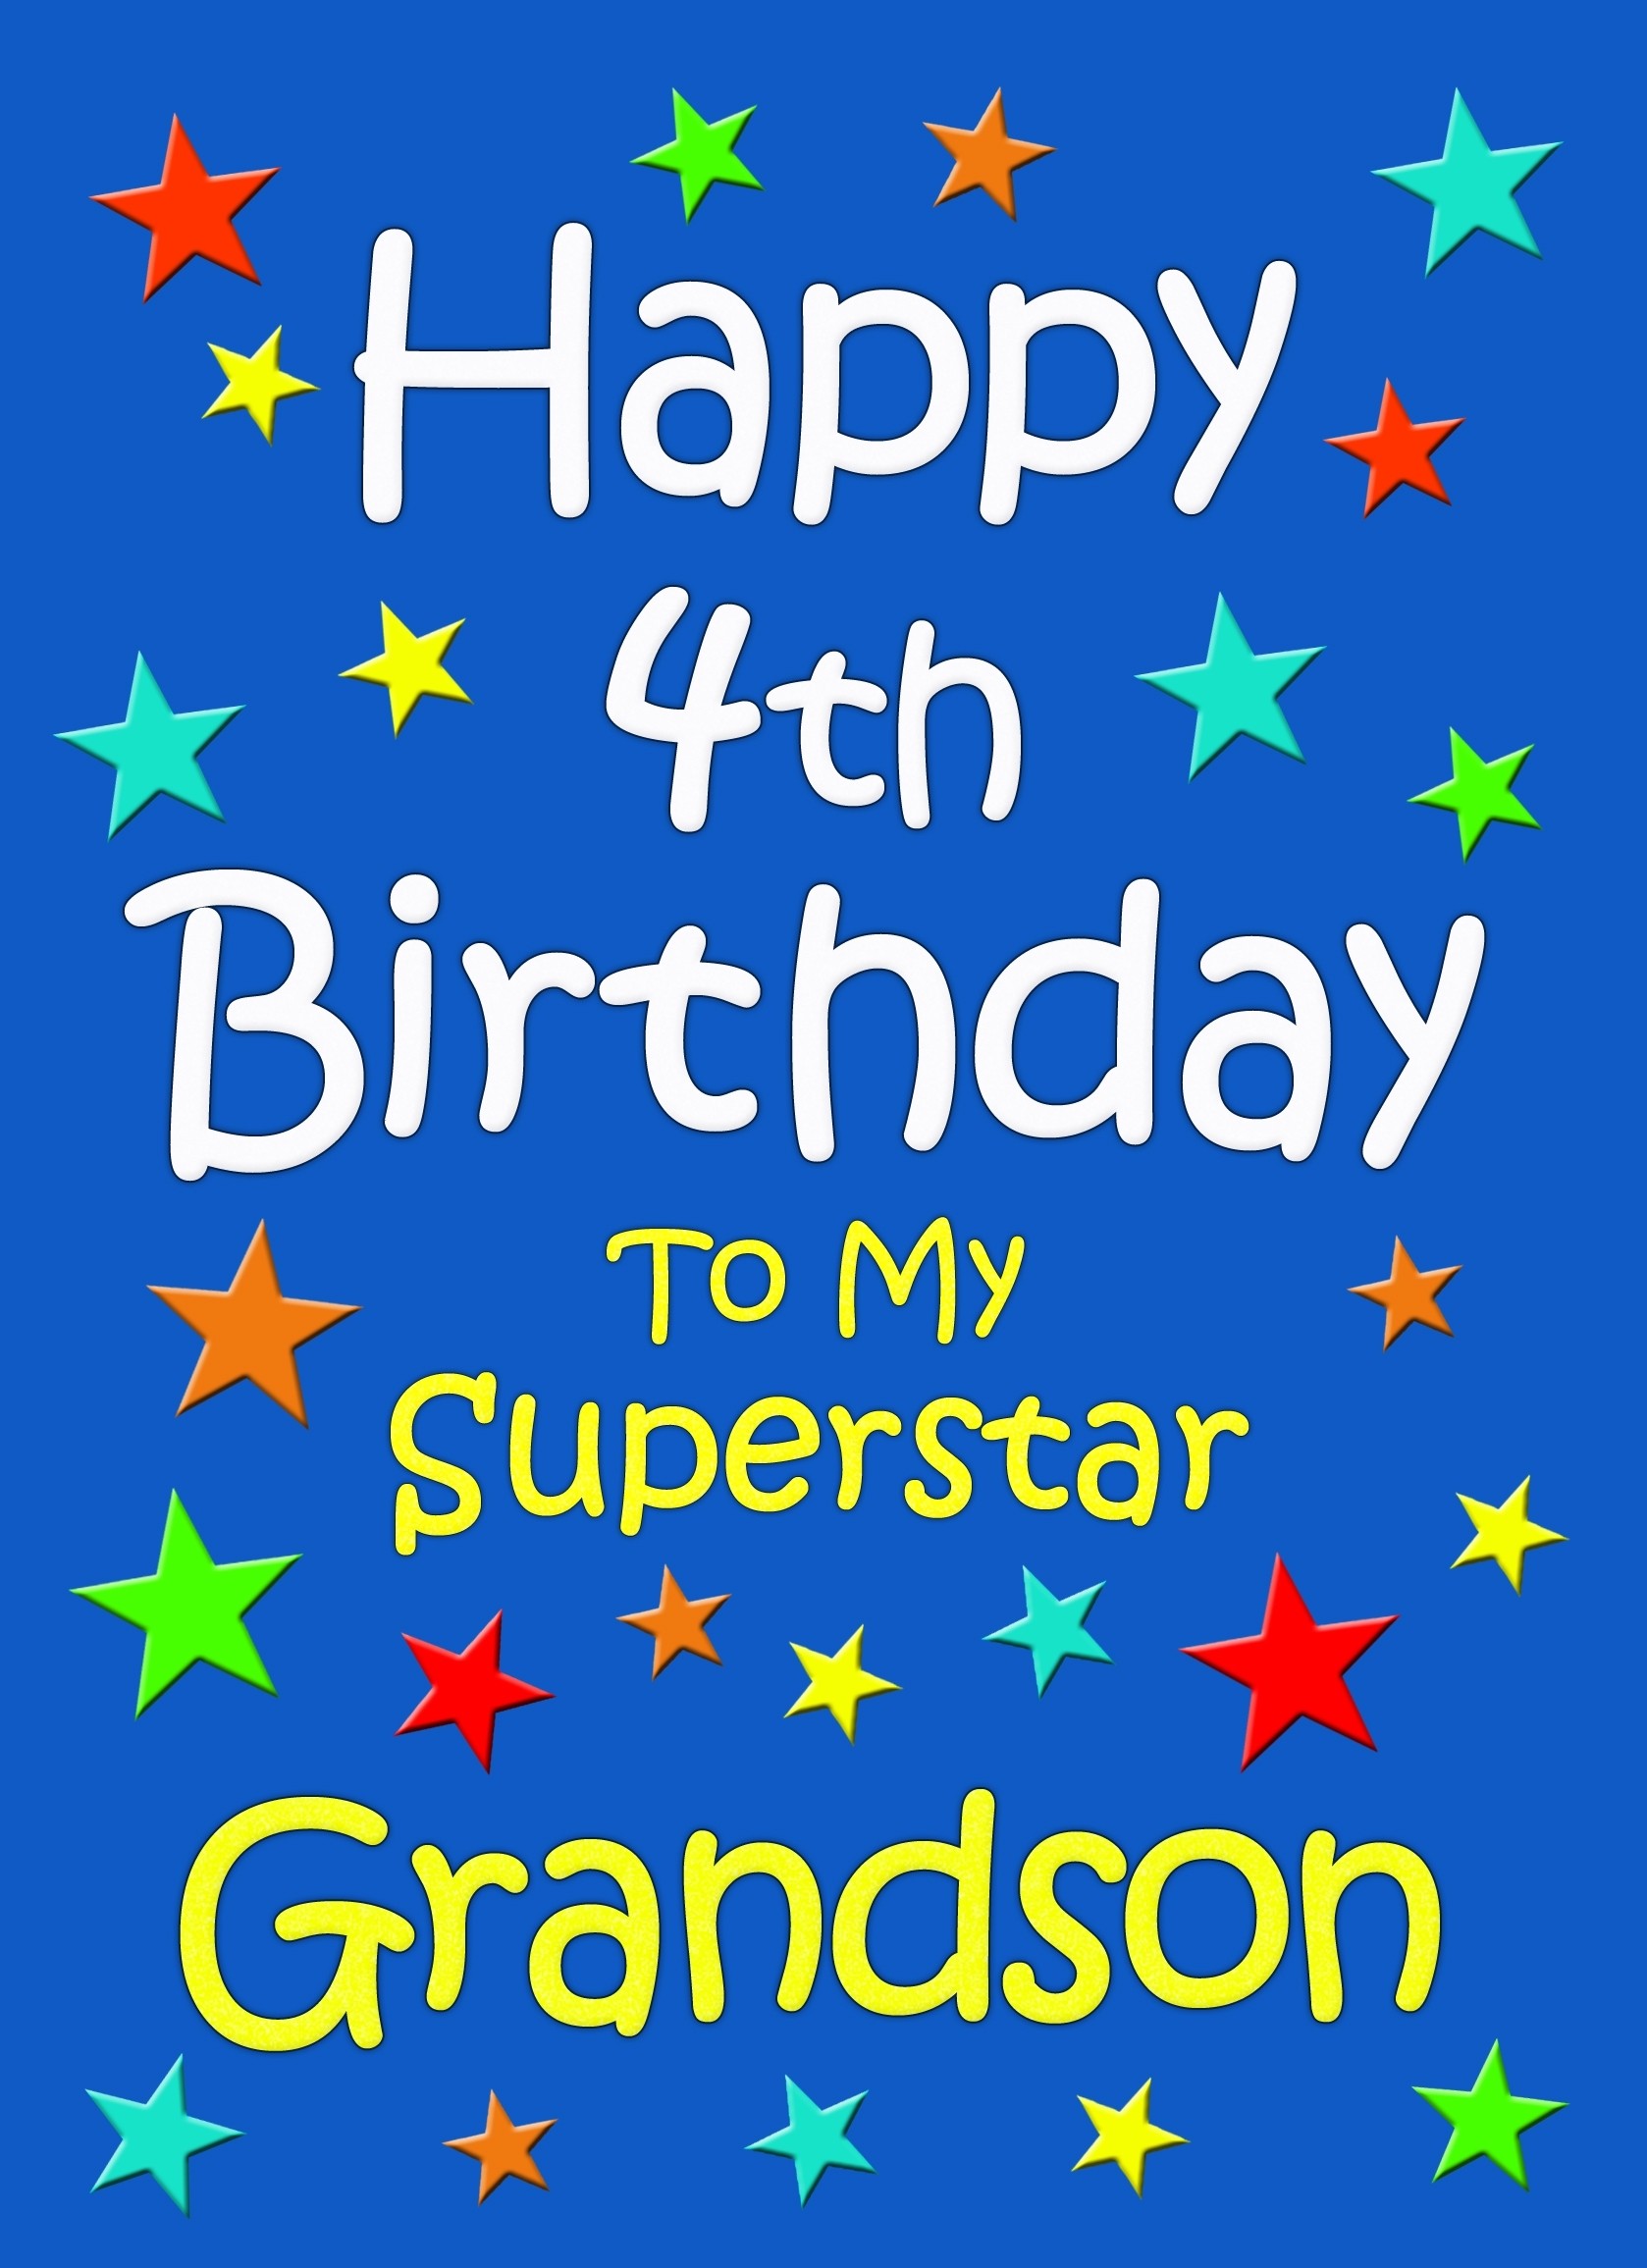 Grandson 4th Birthday Card (Blue)